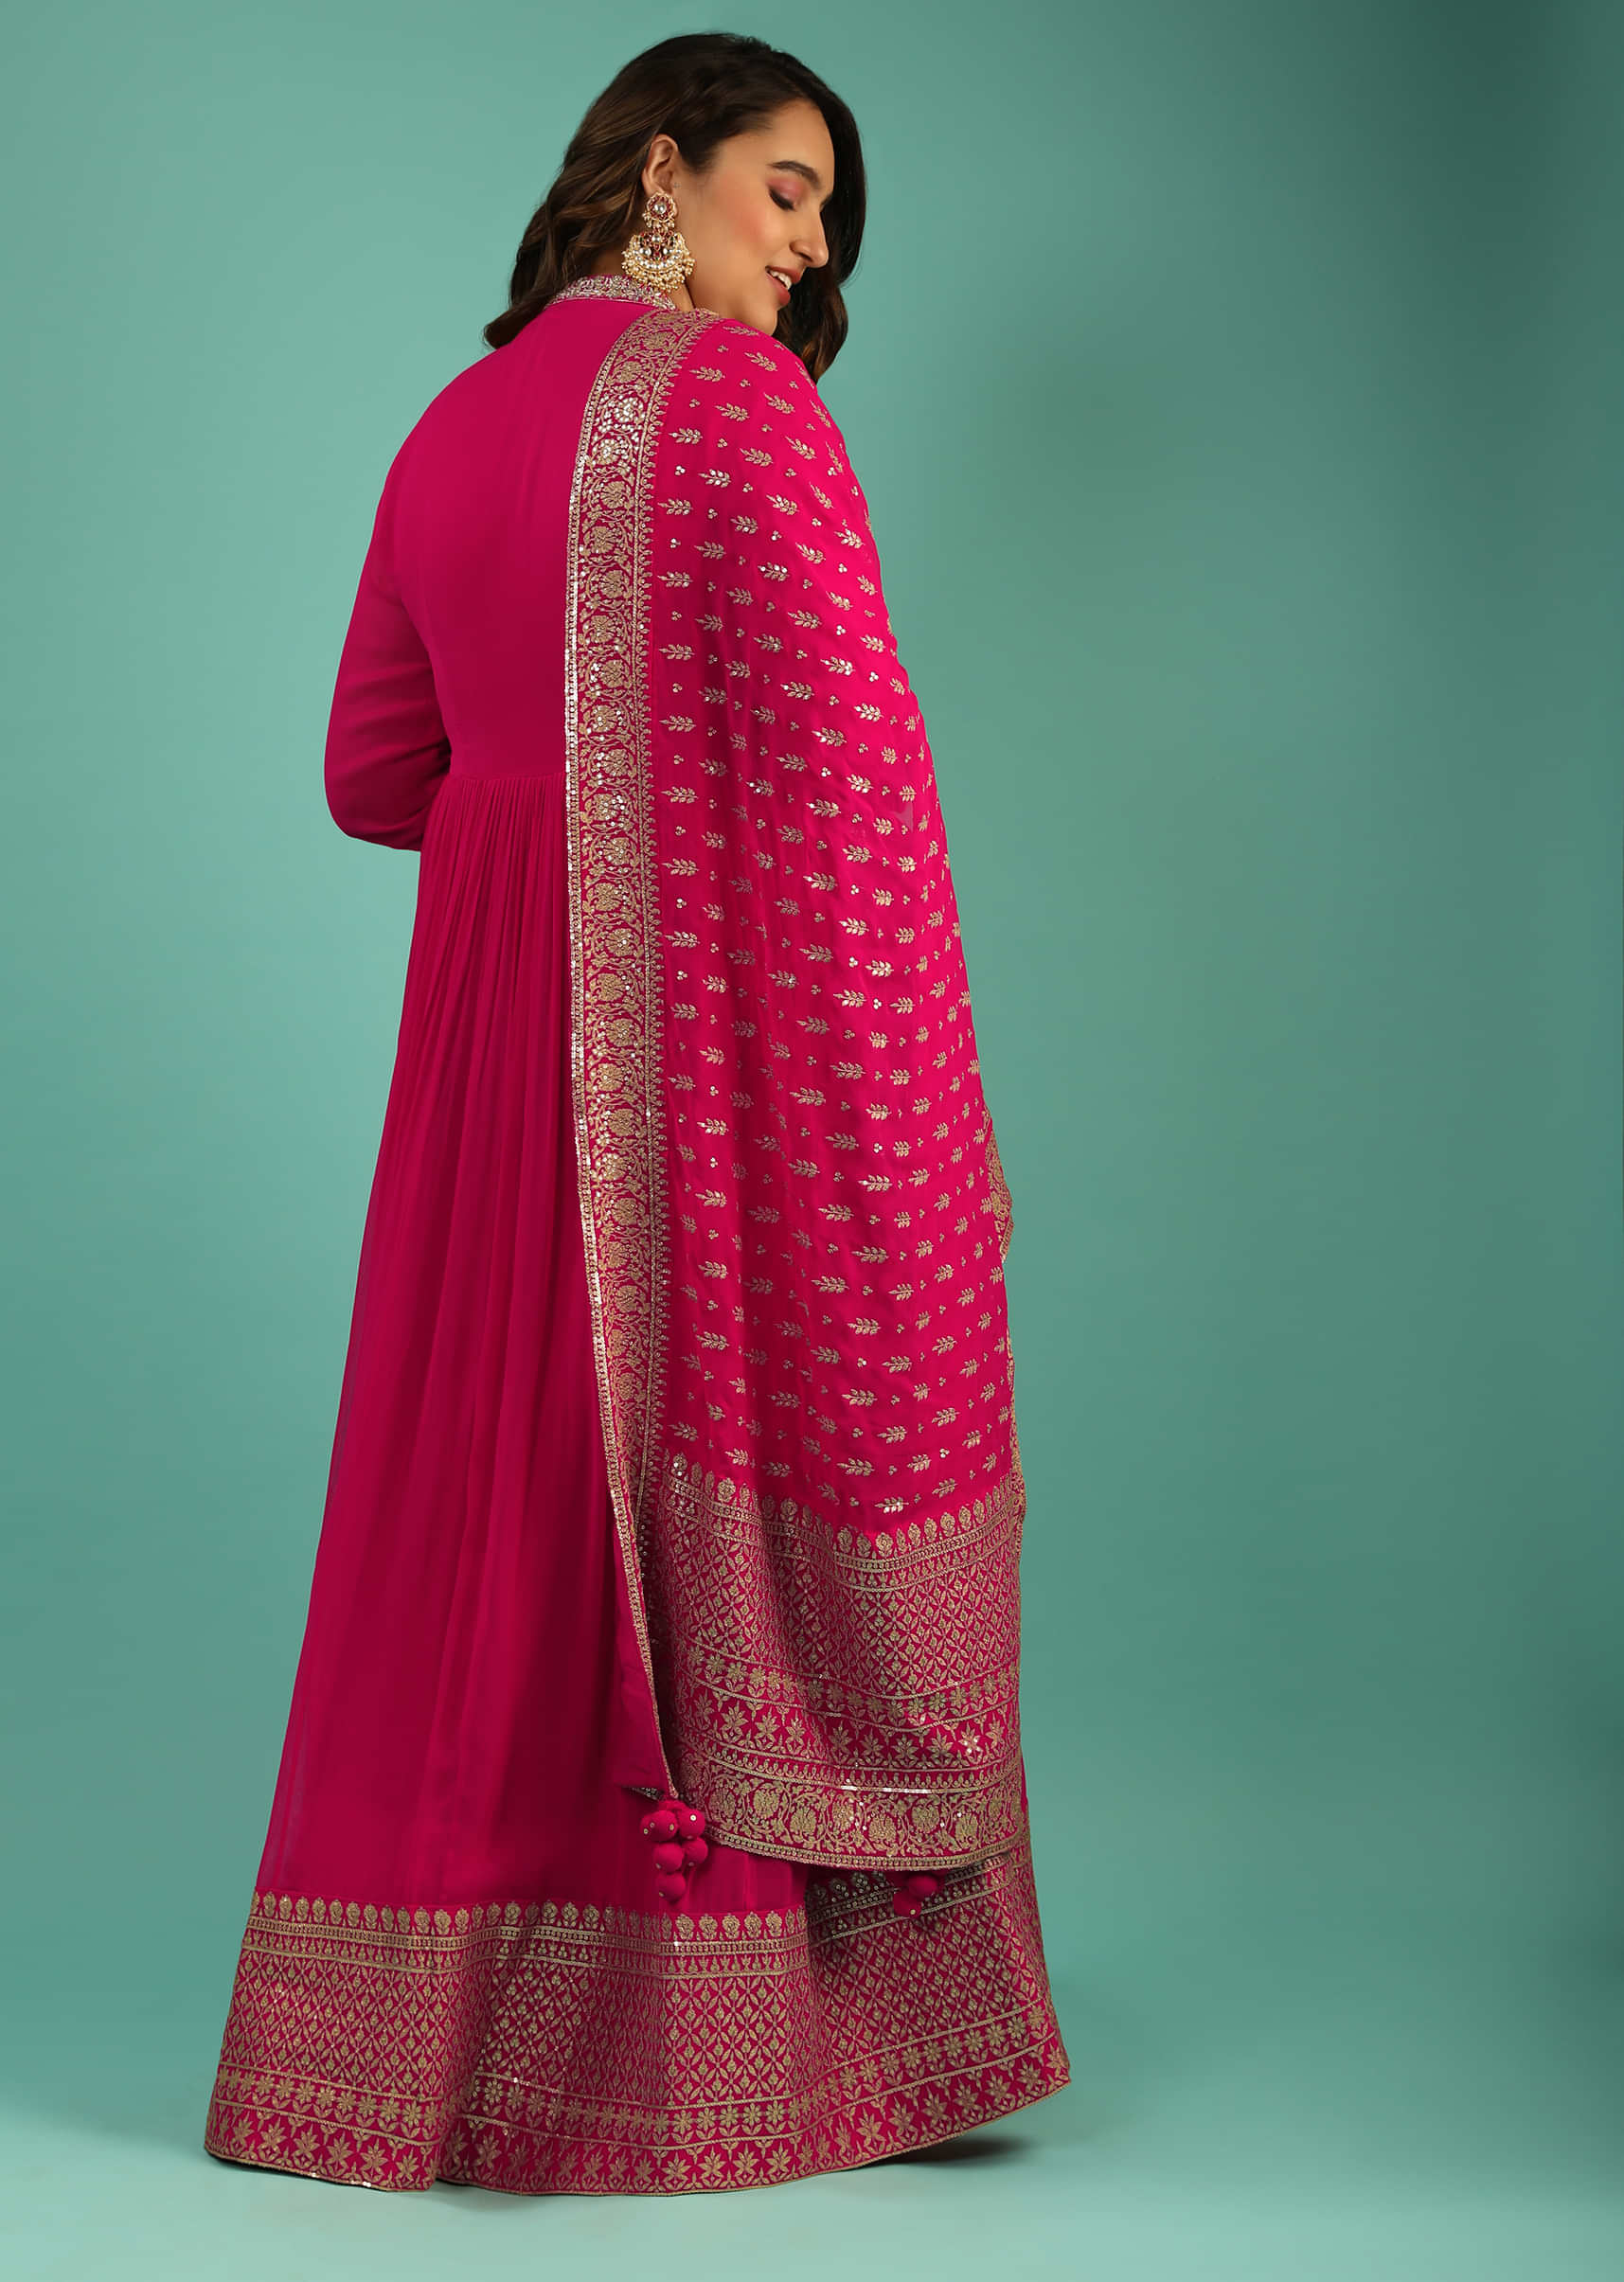 Fuchsia Pink Georgette Anarkali Suit With Zari Embroidery And Zardozi Work